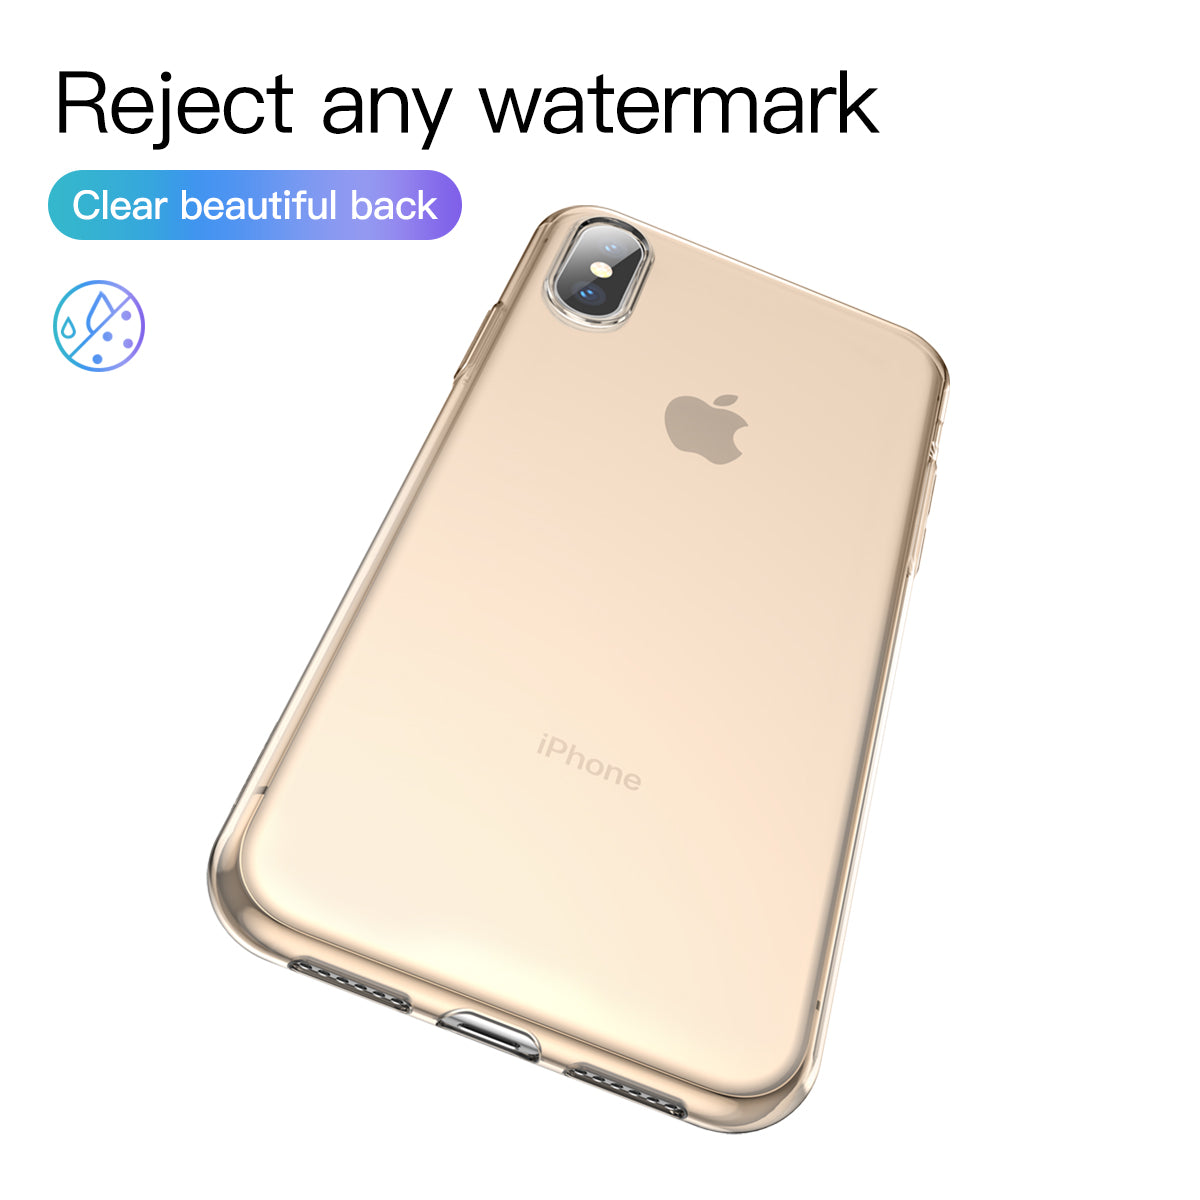 iPhone-XS-Baseus-Simple-Series-Transparent-Gold-Anti-Watermark_S07WDWA7BEGY.jpg